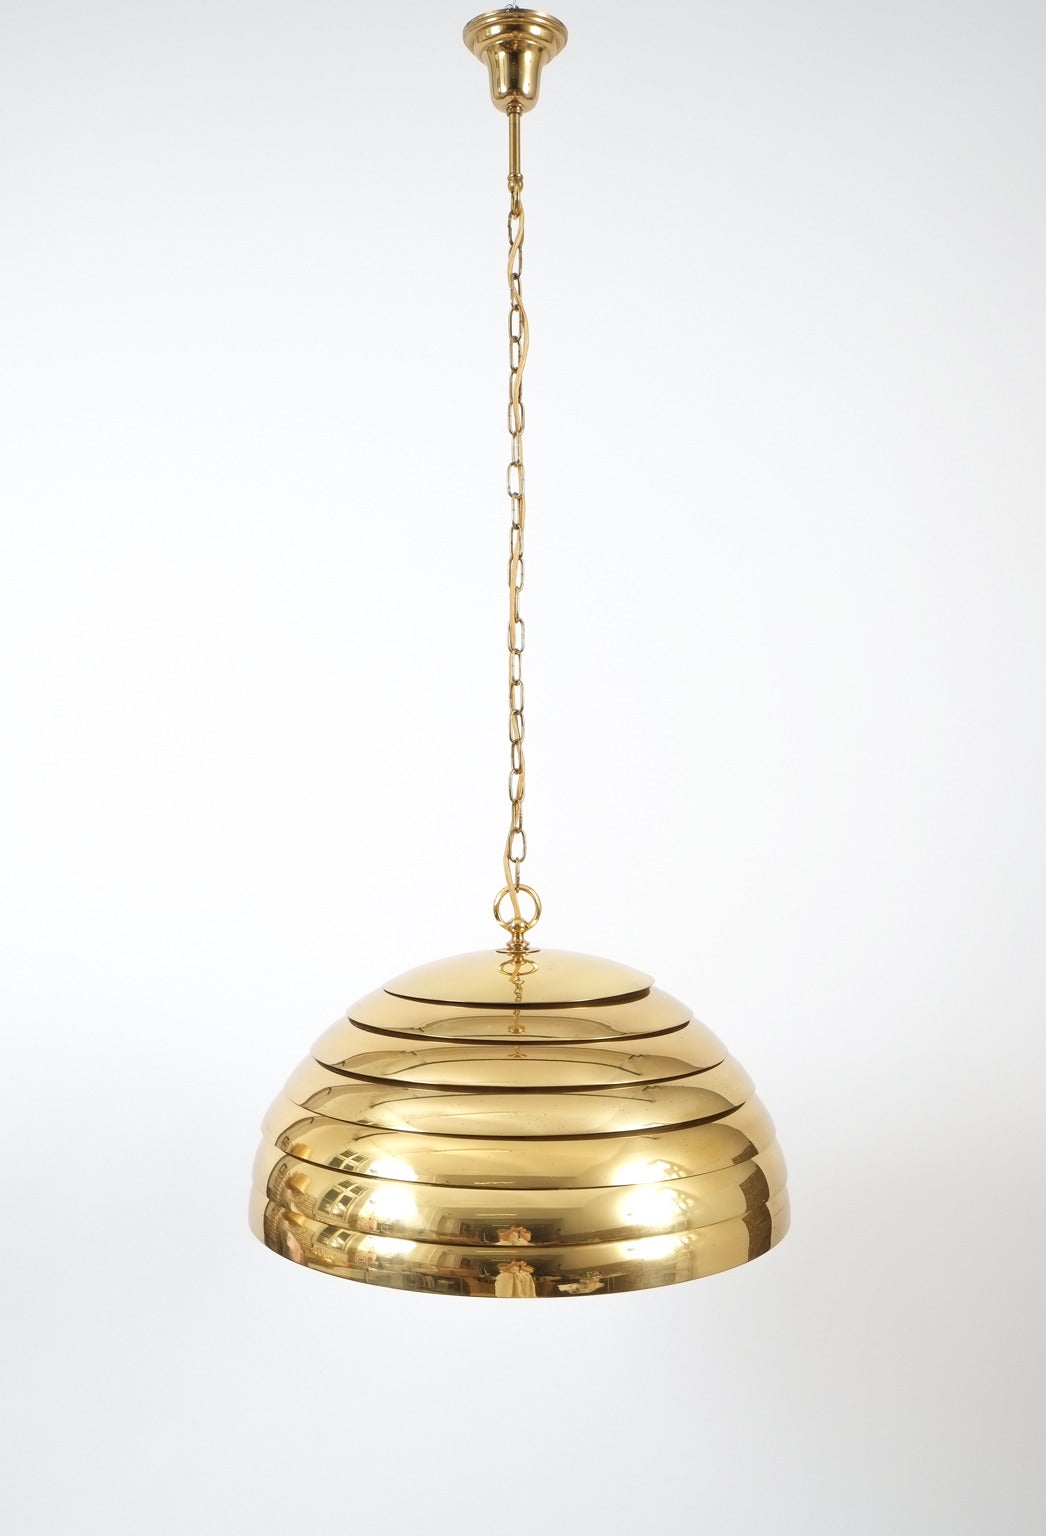 Mid-Century Modern Florian Schulz Large Behive Brass Dome Pendant Lamp Translucent Diffuser, 1960